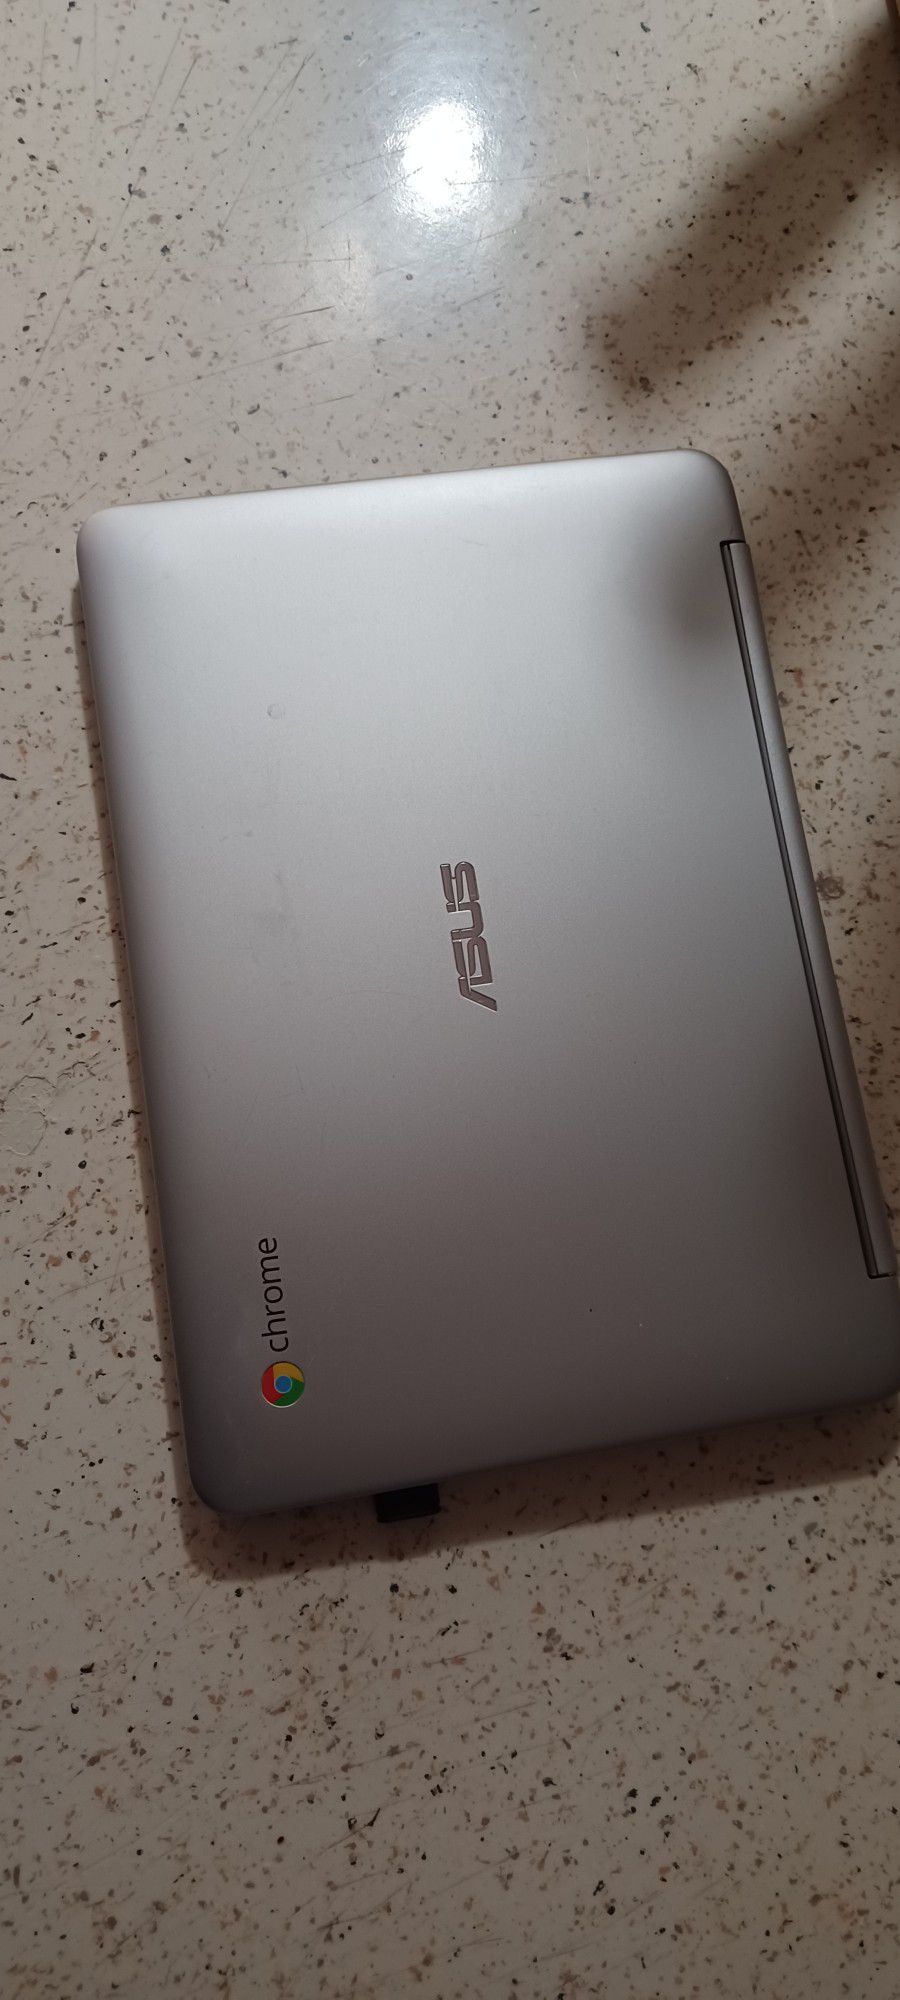 Asus Notebook Laptop